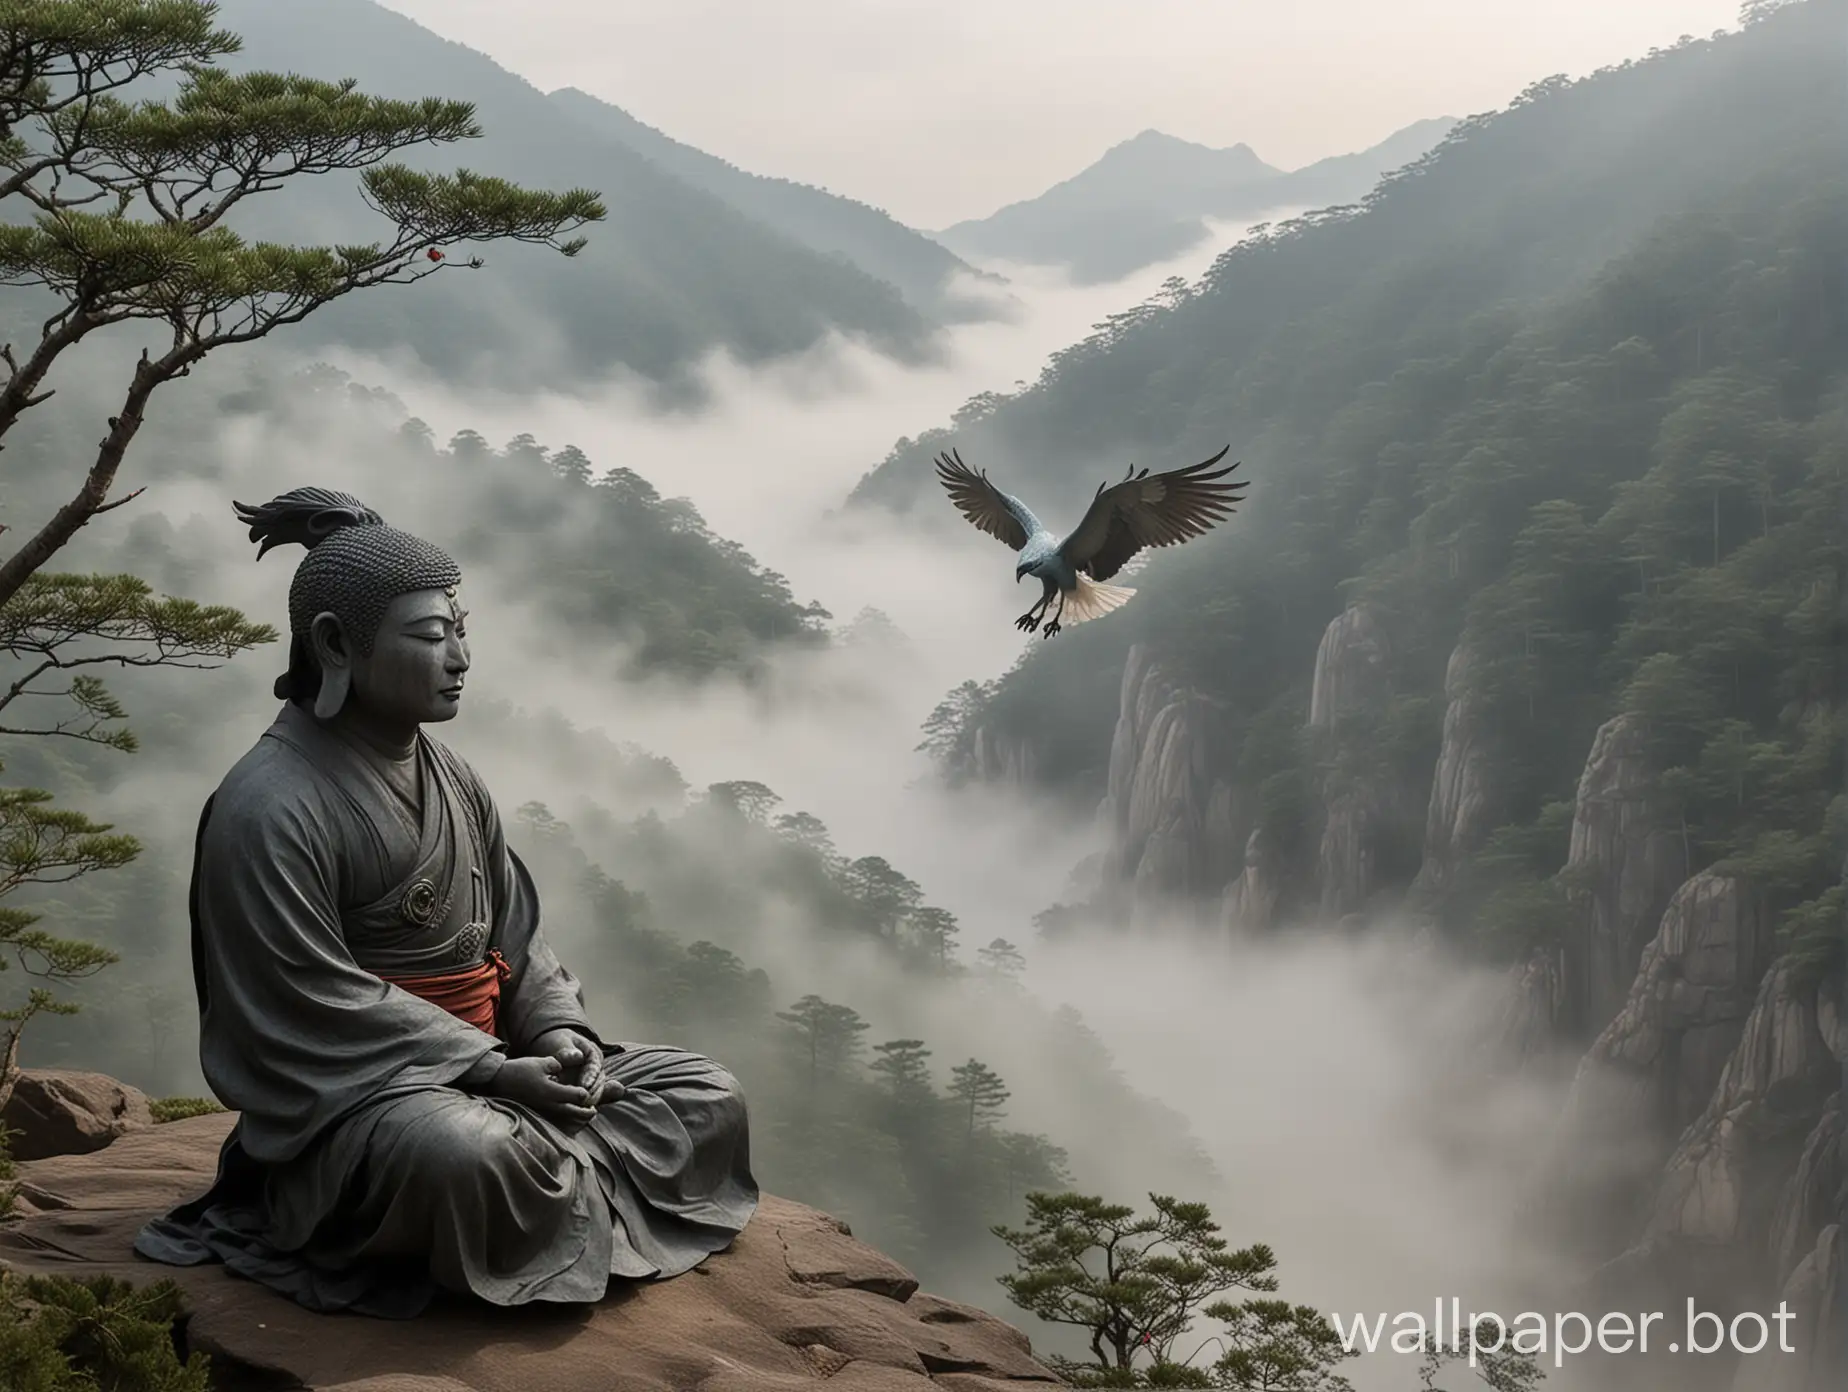 garuda bird large in Korean misty mountains AND meditating zen monk Kodo Sawaki AND greenpeace activist